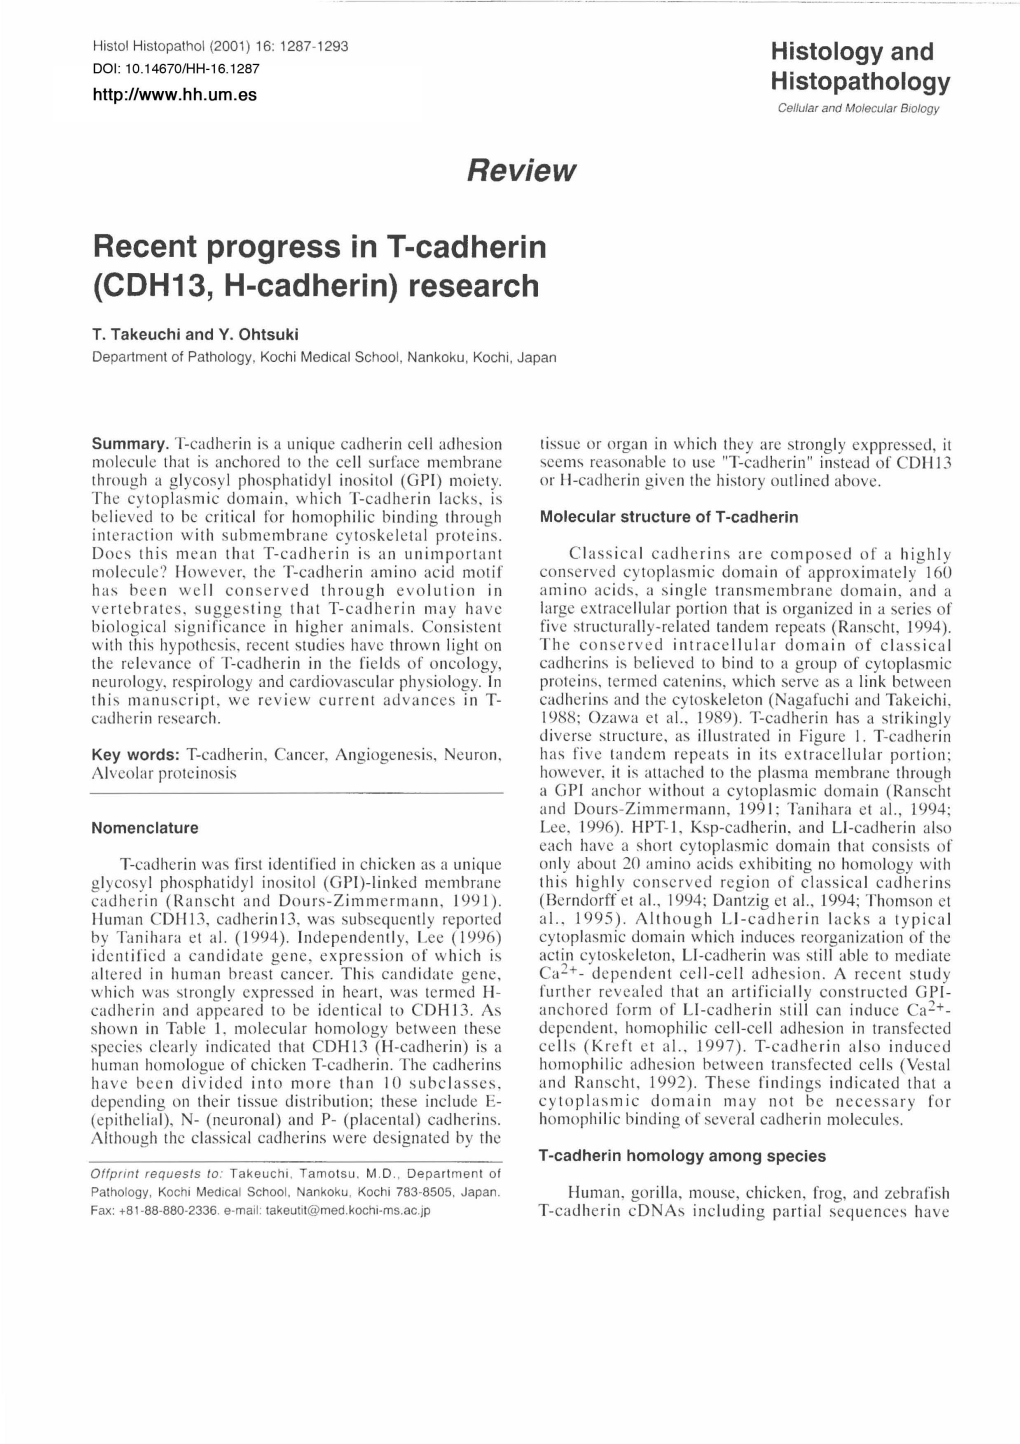 Review Recent Progress in T-Cadherin